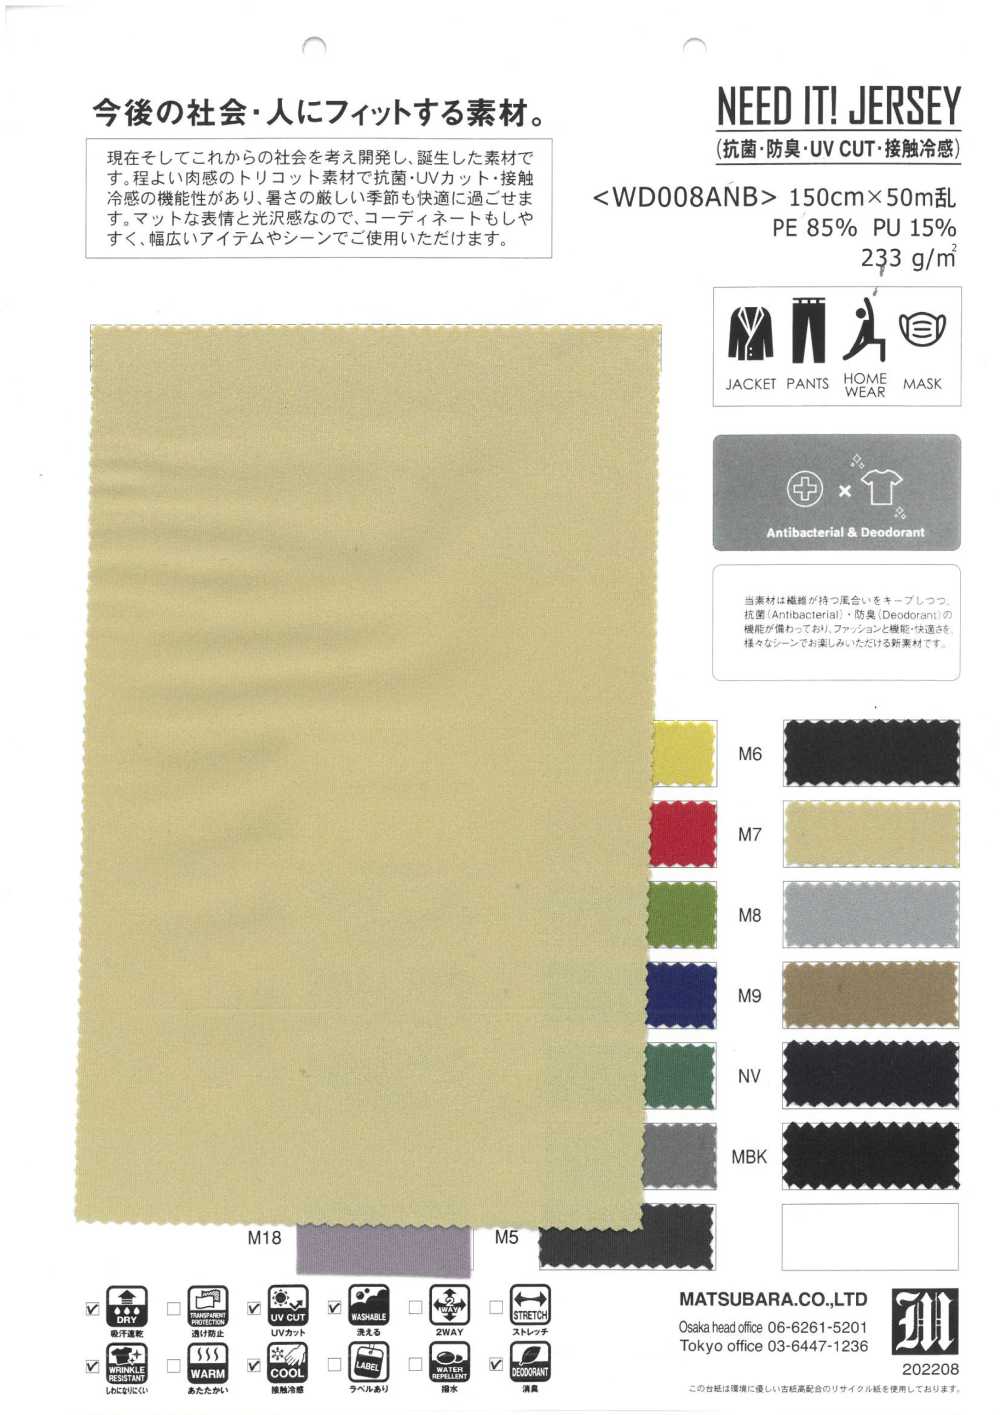 WD008ANB BESOIN DE ÇA! JERSEY (Antibactérien, Déodorant, UV CUT Cool To The Touch)[Fabrication De Textile] Matsubara